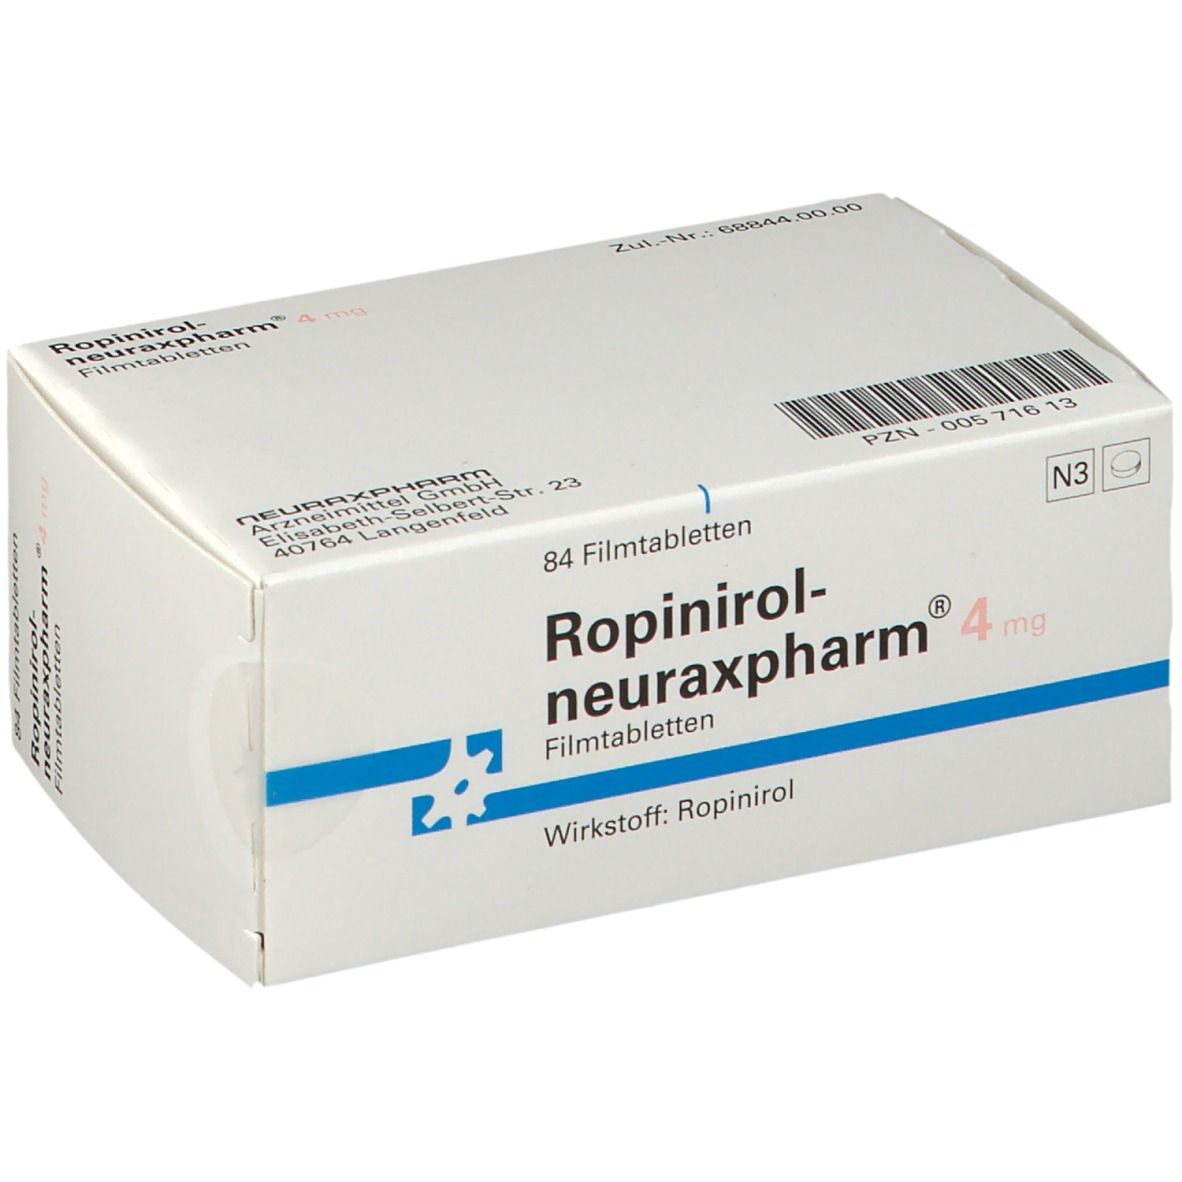 Ropinirol-neuraxpharm® 4 mg